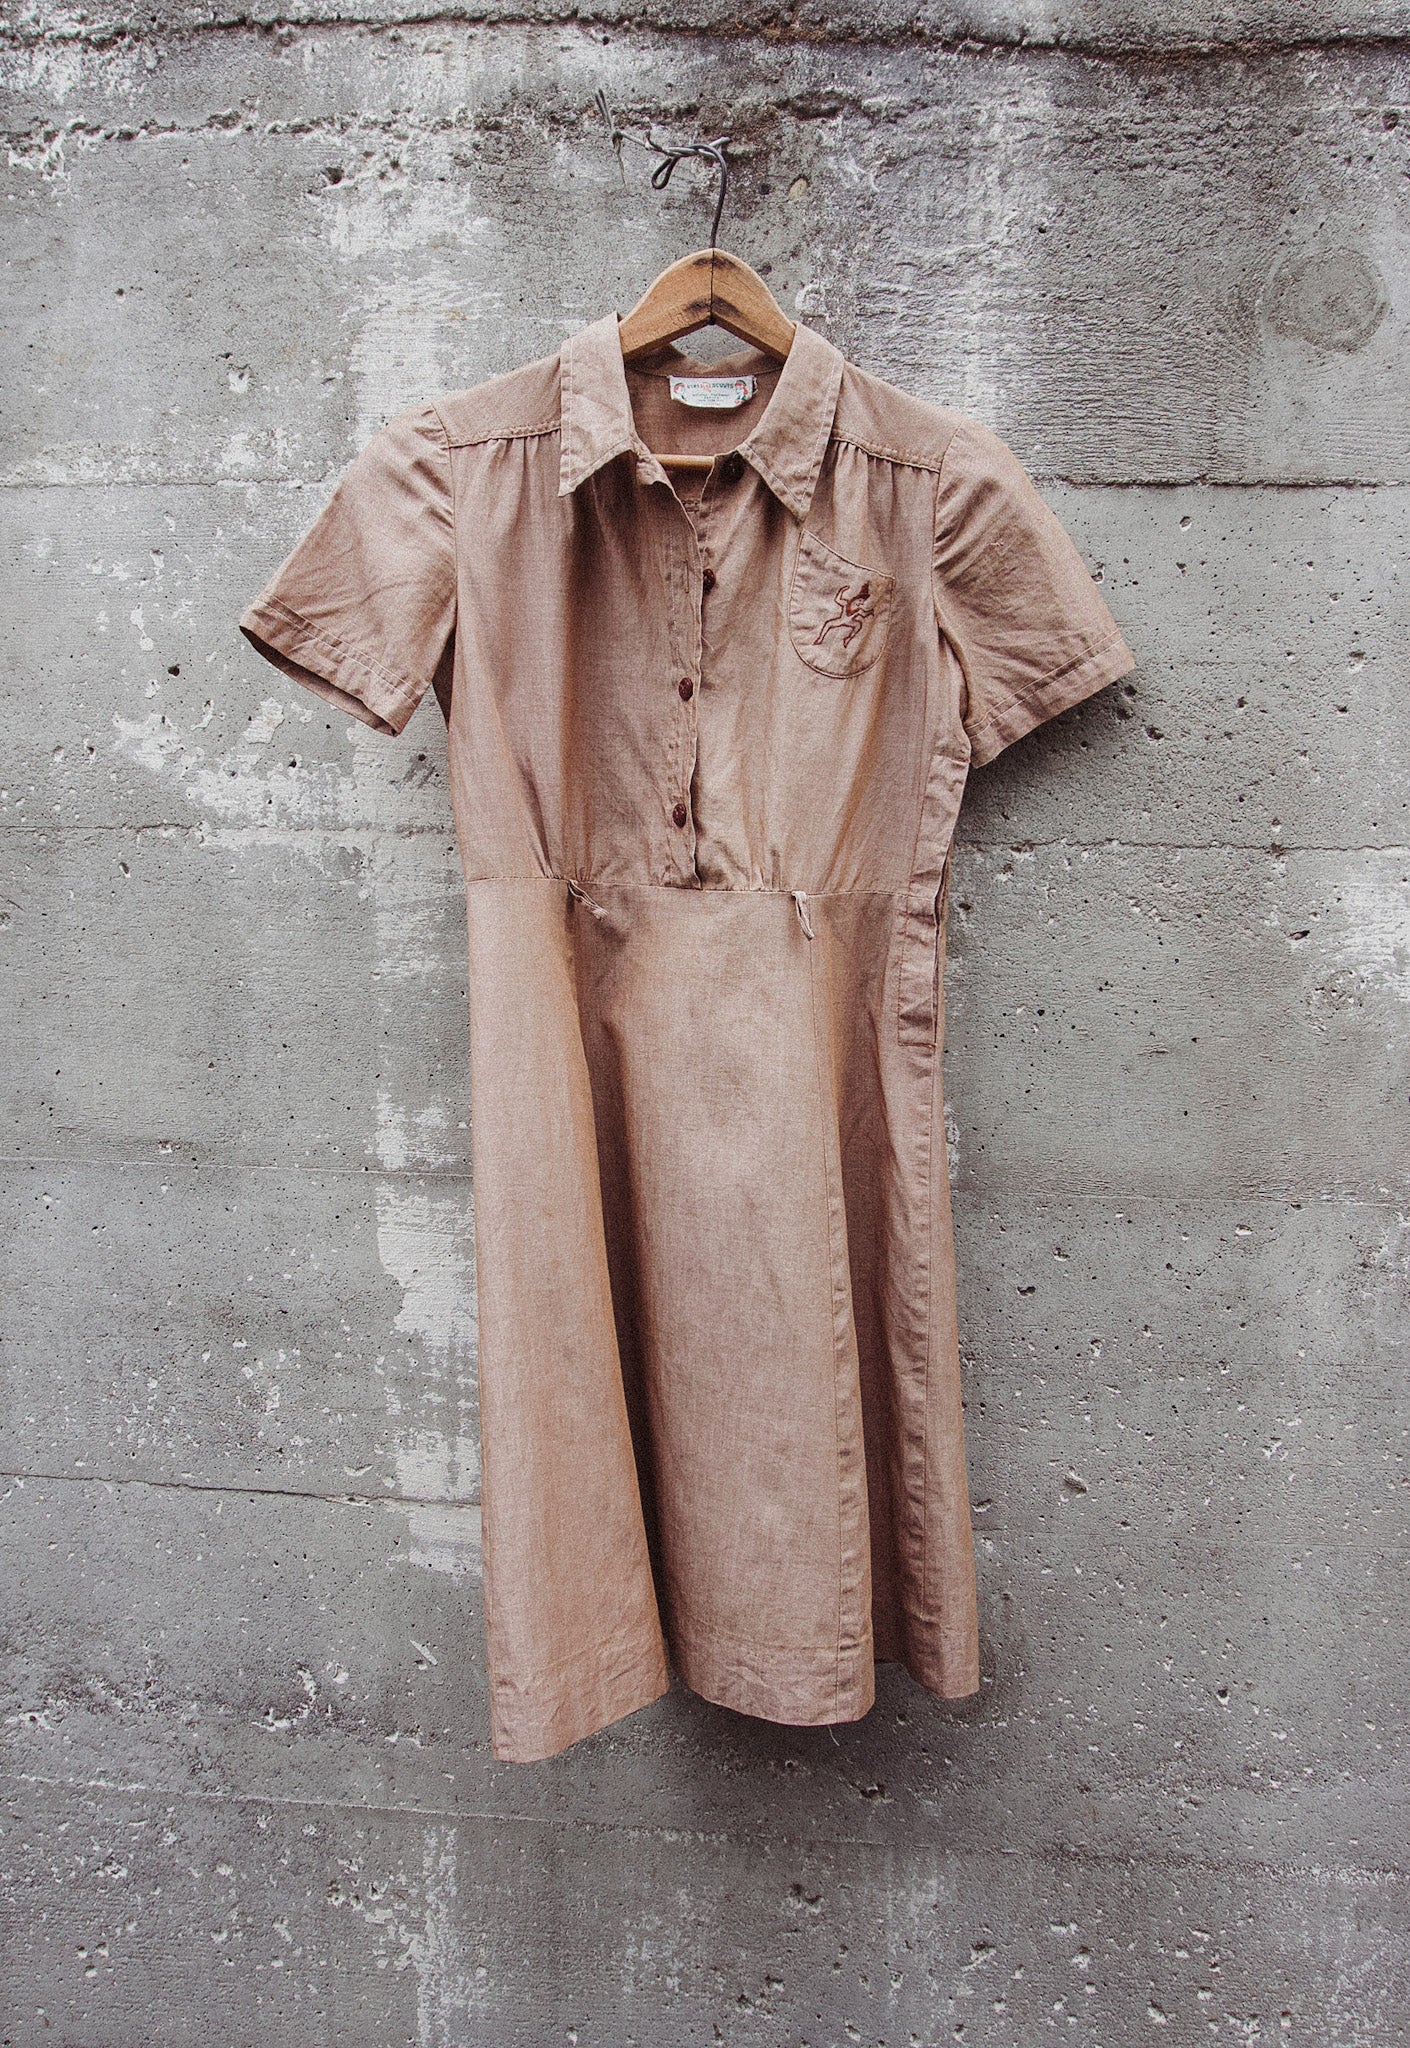 1940s vintage girl scouts brownie uniform